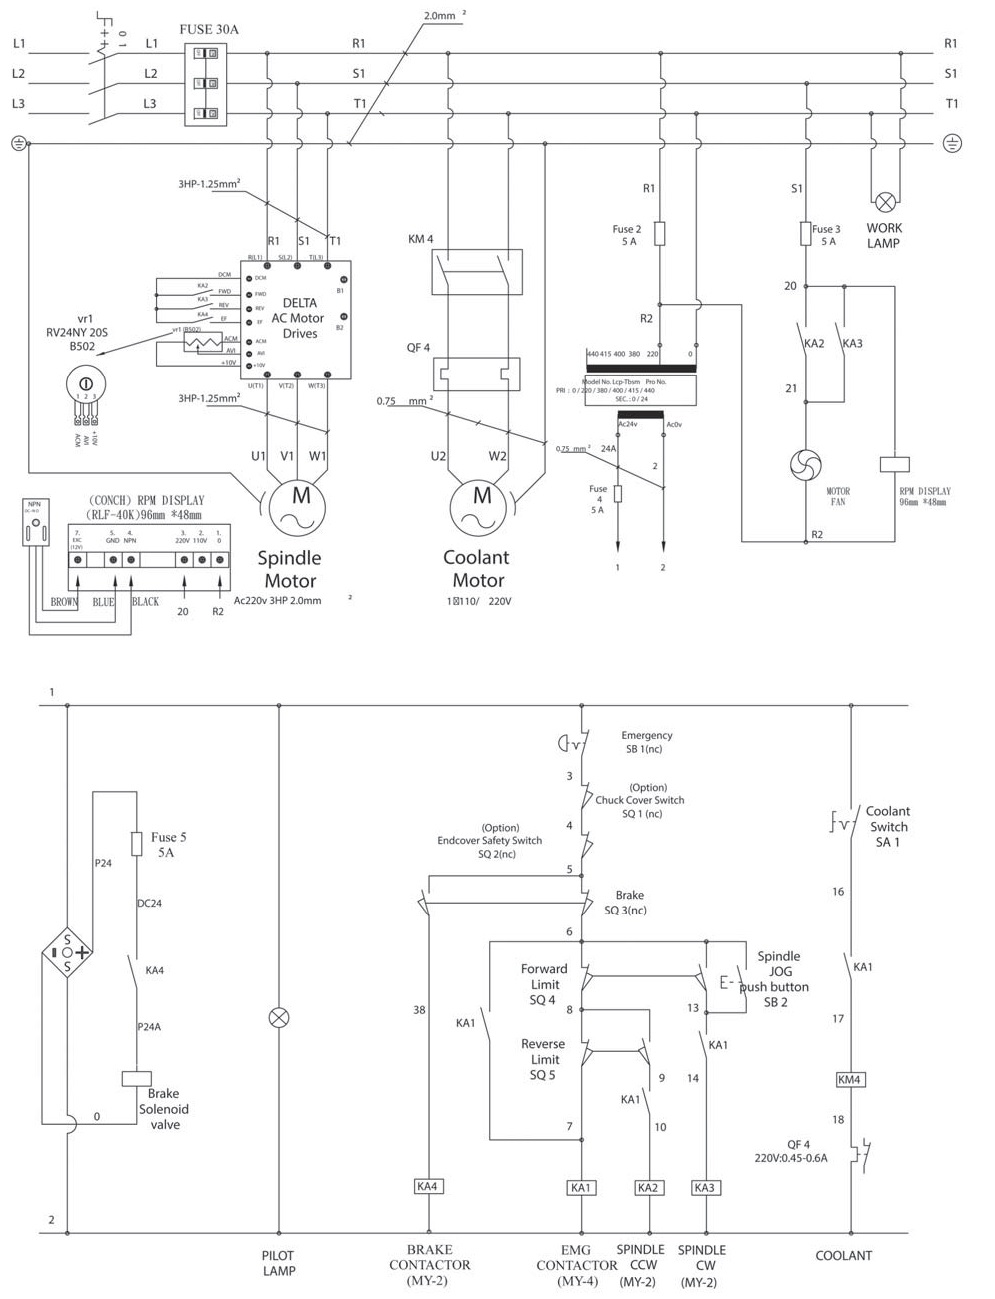 Jet 1440EVS wiring Diagram.jpg